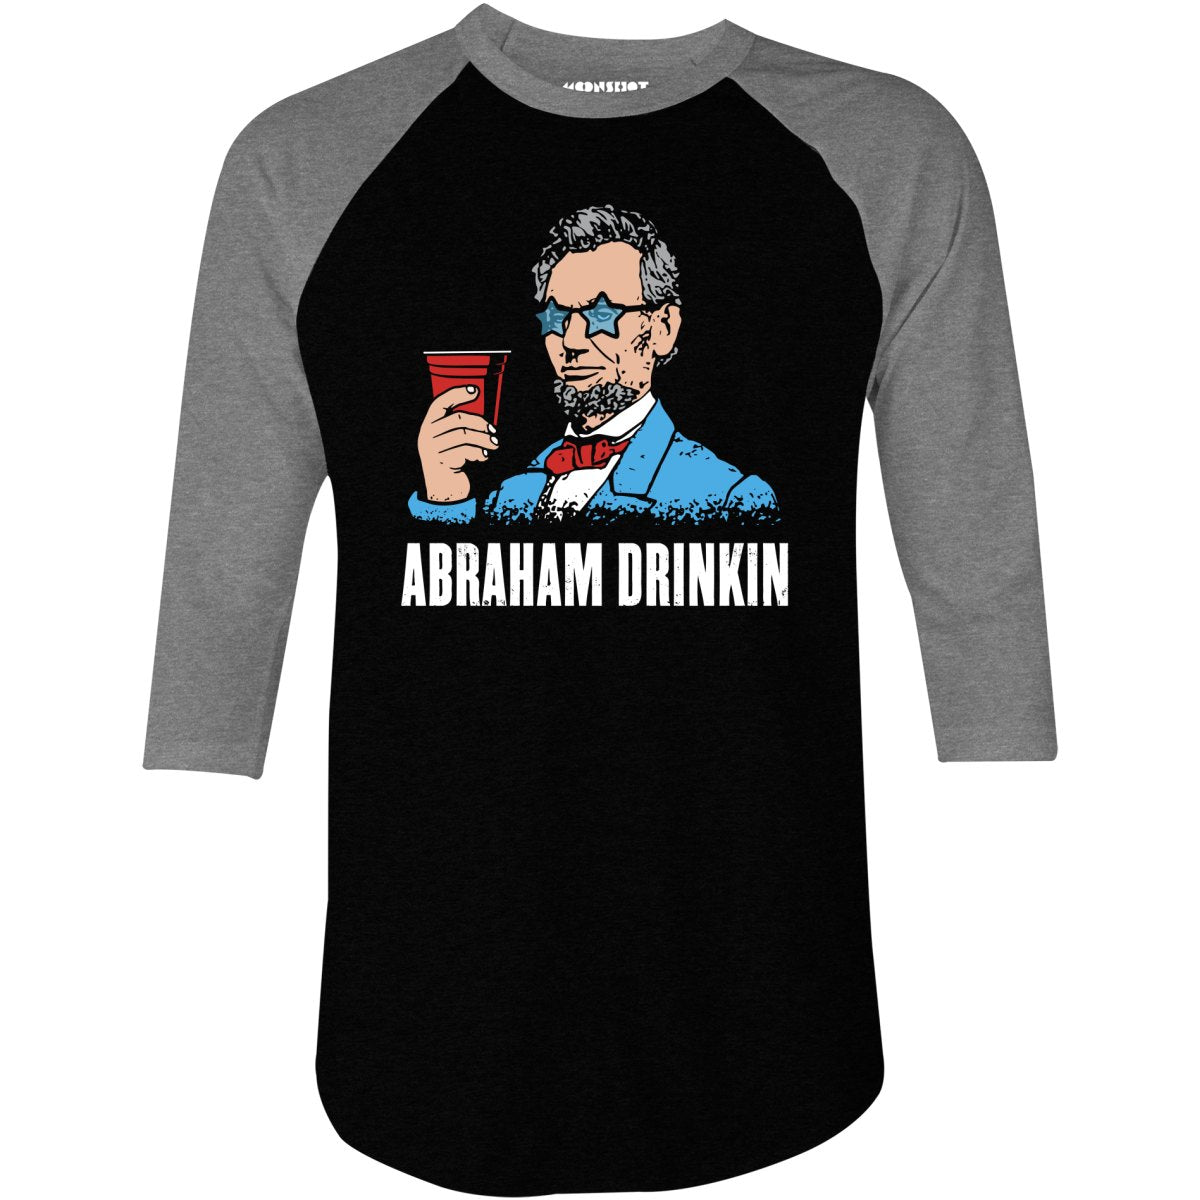 Abraham Drinkin - 3/4 Sleeve Raglan T-Shirt